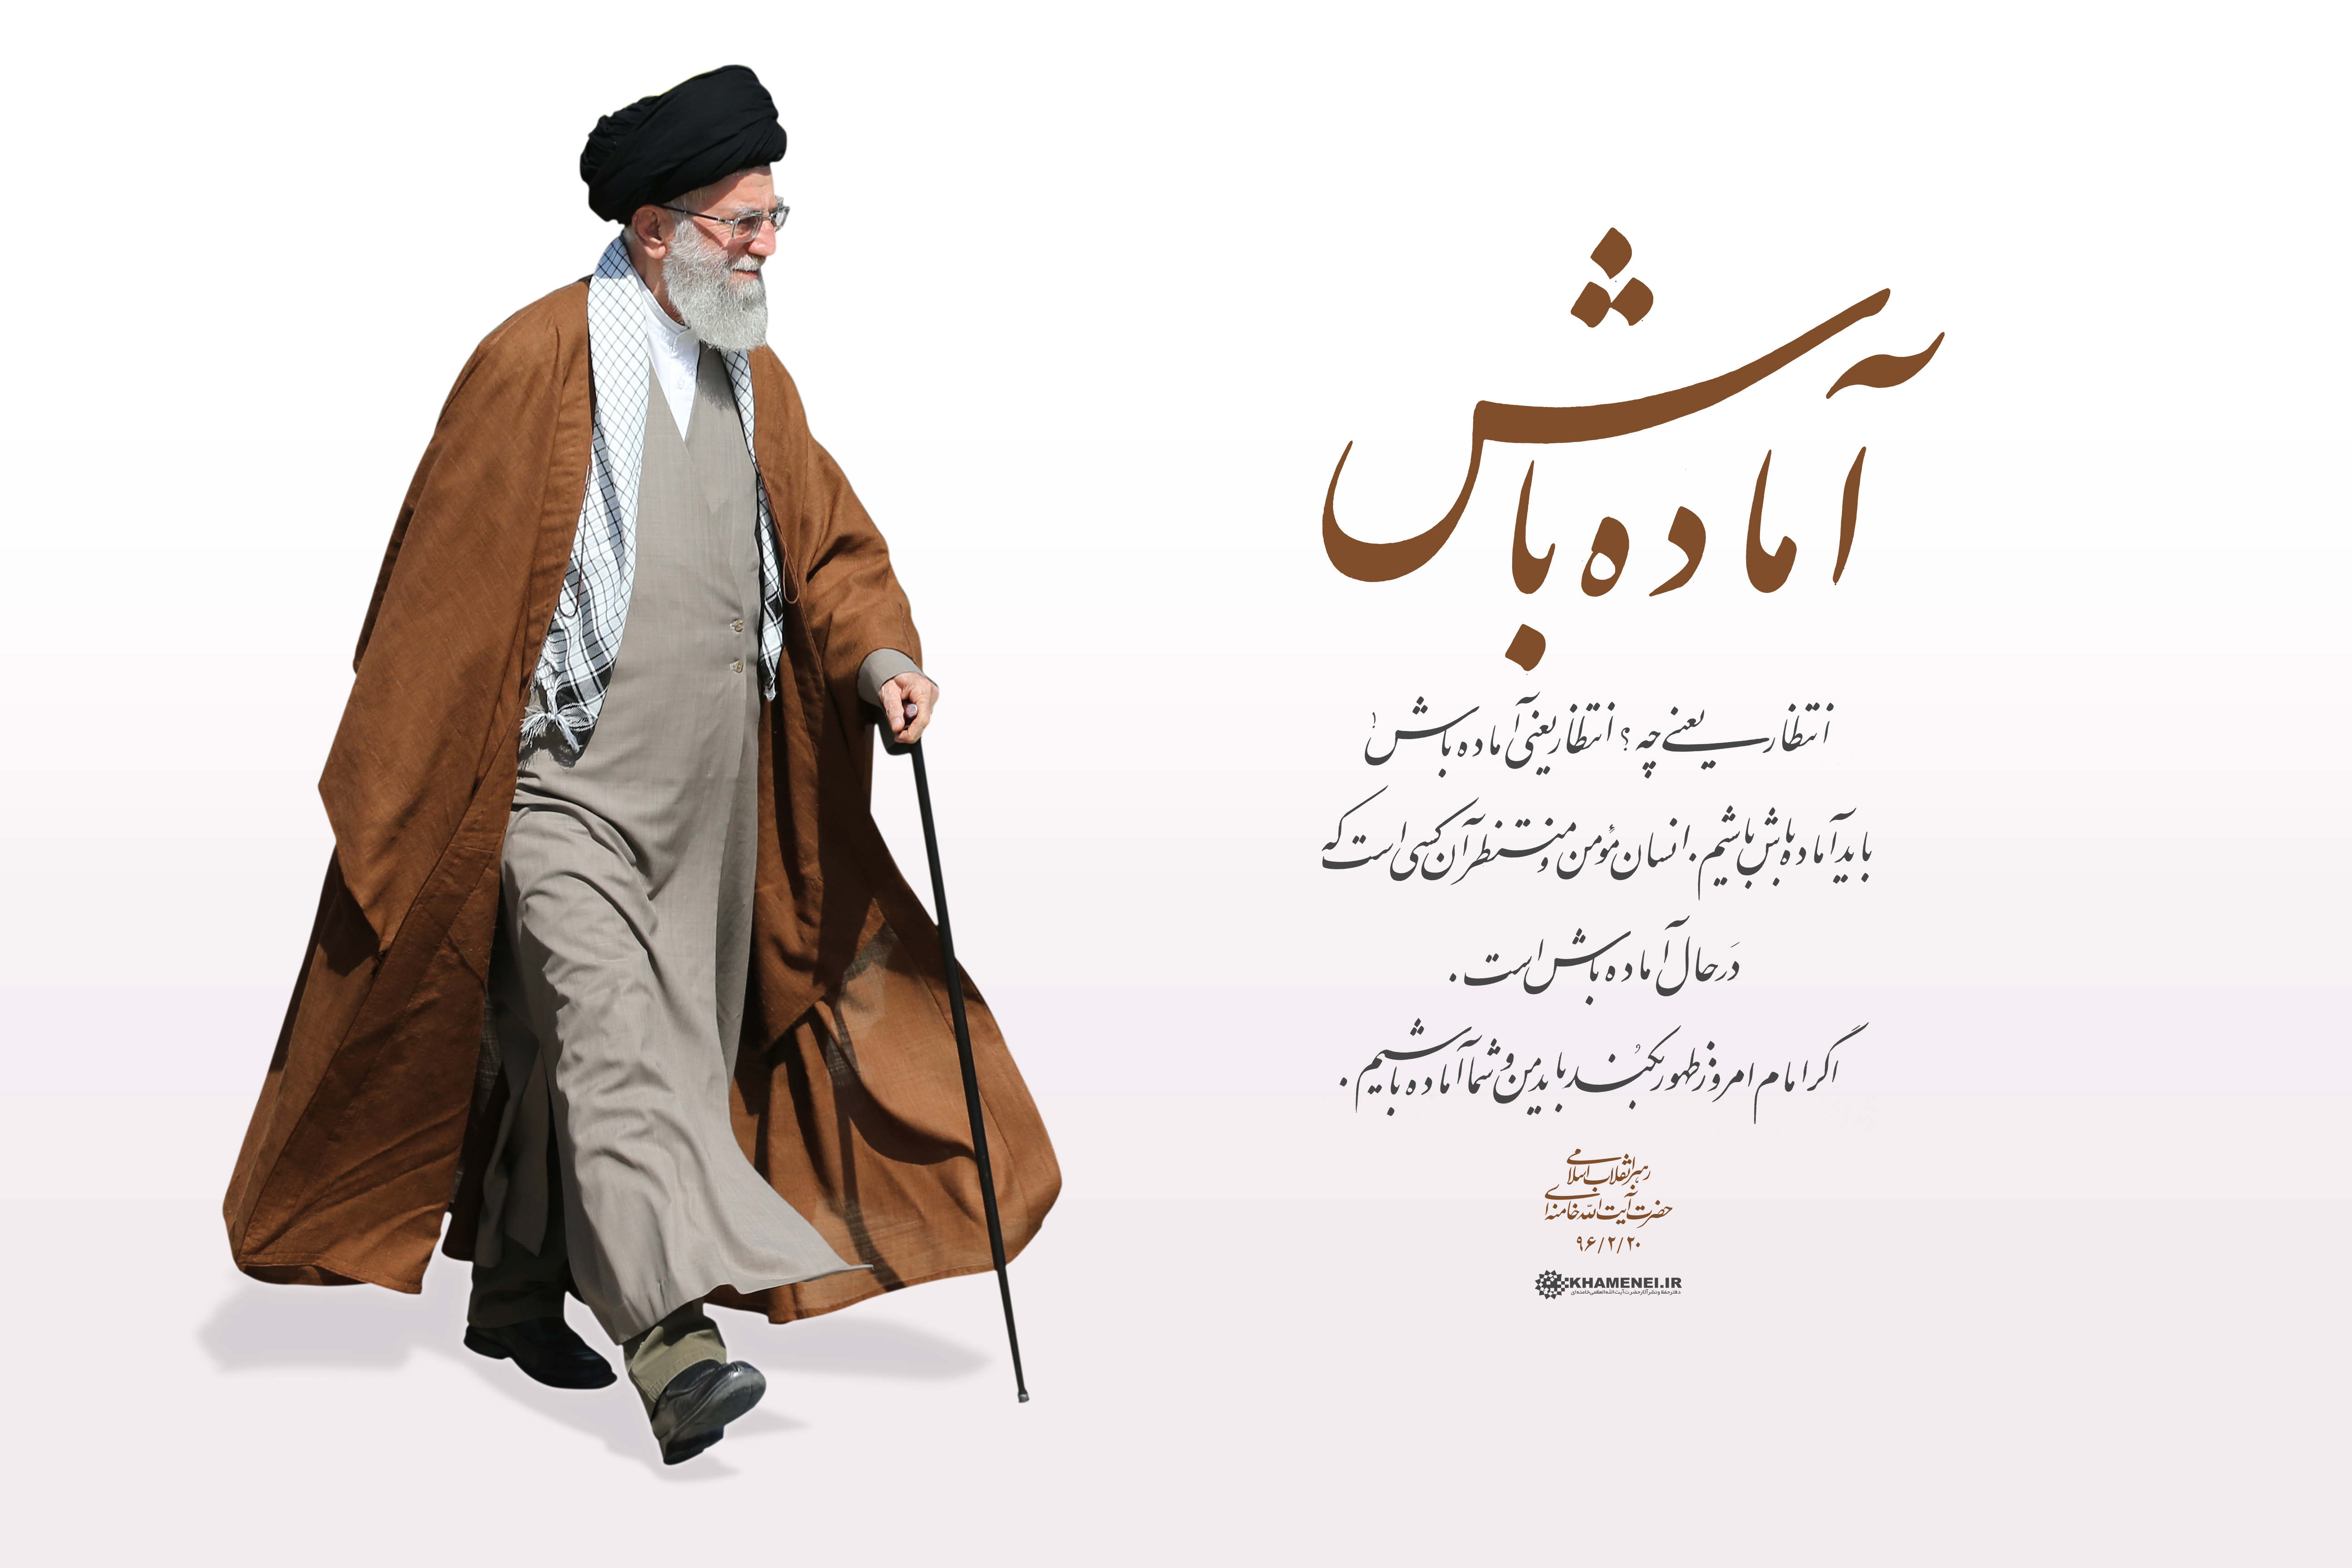 http://farsi.khamenei.ir/ndata/news/36501/B/13960222_0136501.jpg